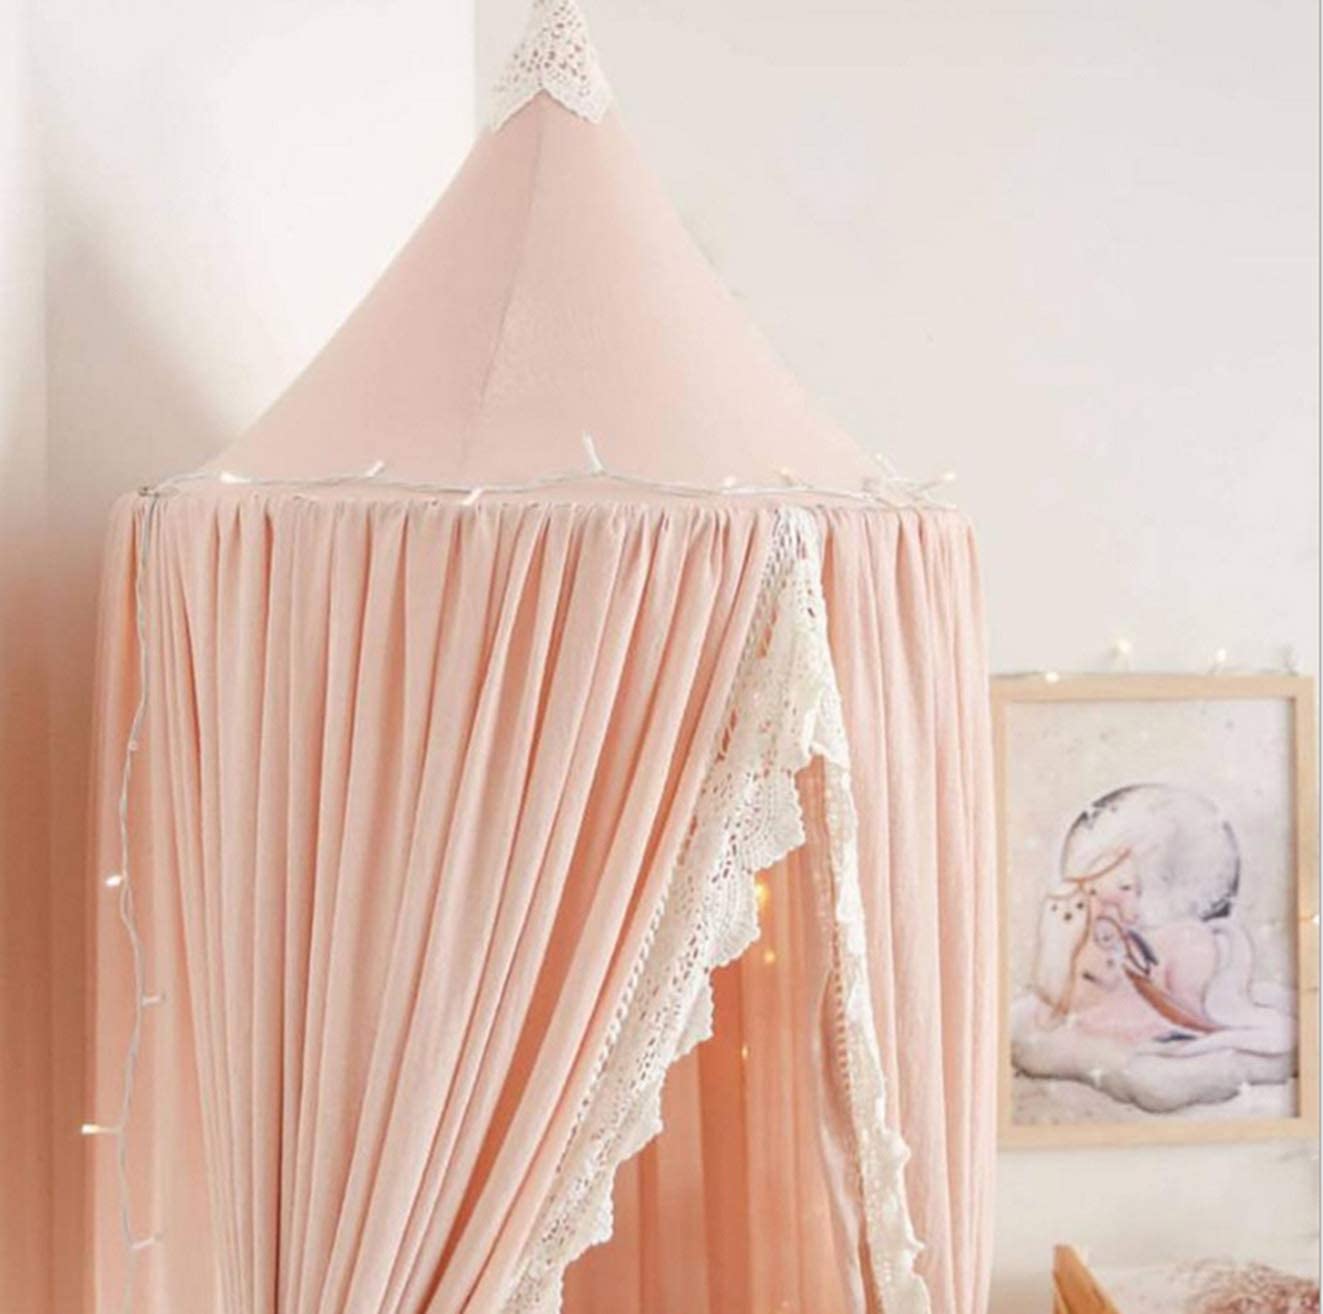 Dome Prinzessin Betthimmel Vorhang Baumwolle Zelt Kinderzimmer Dekor